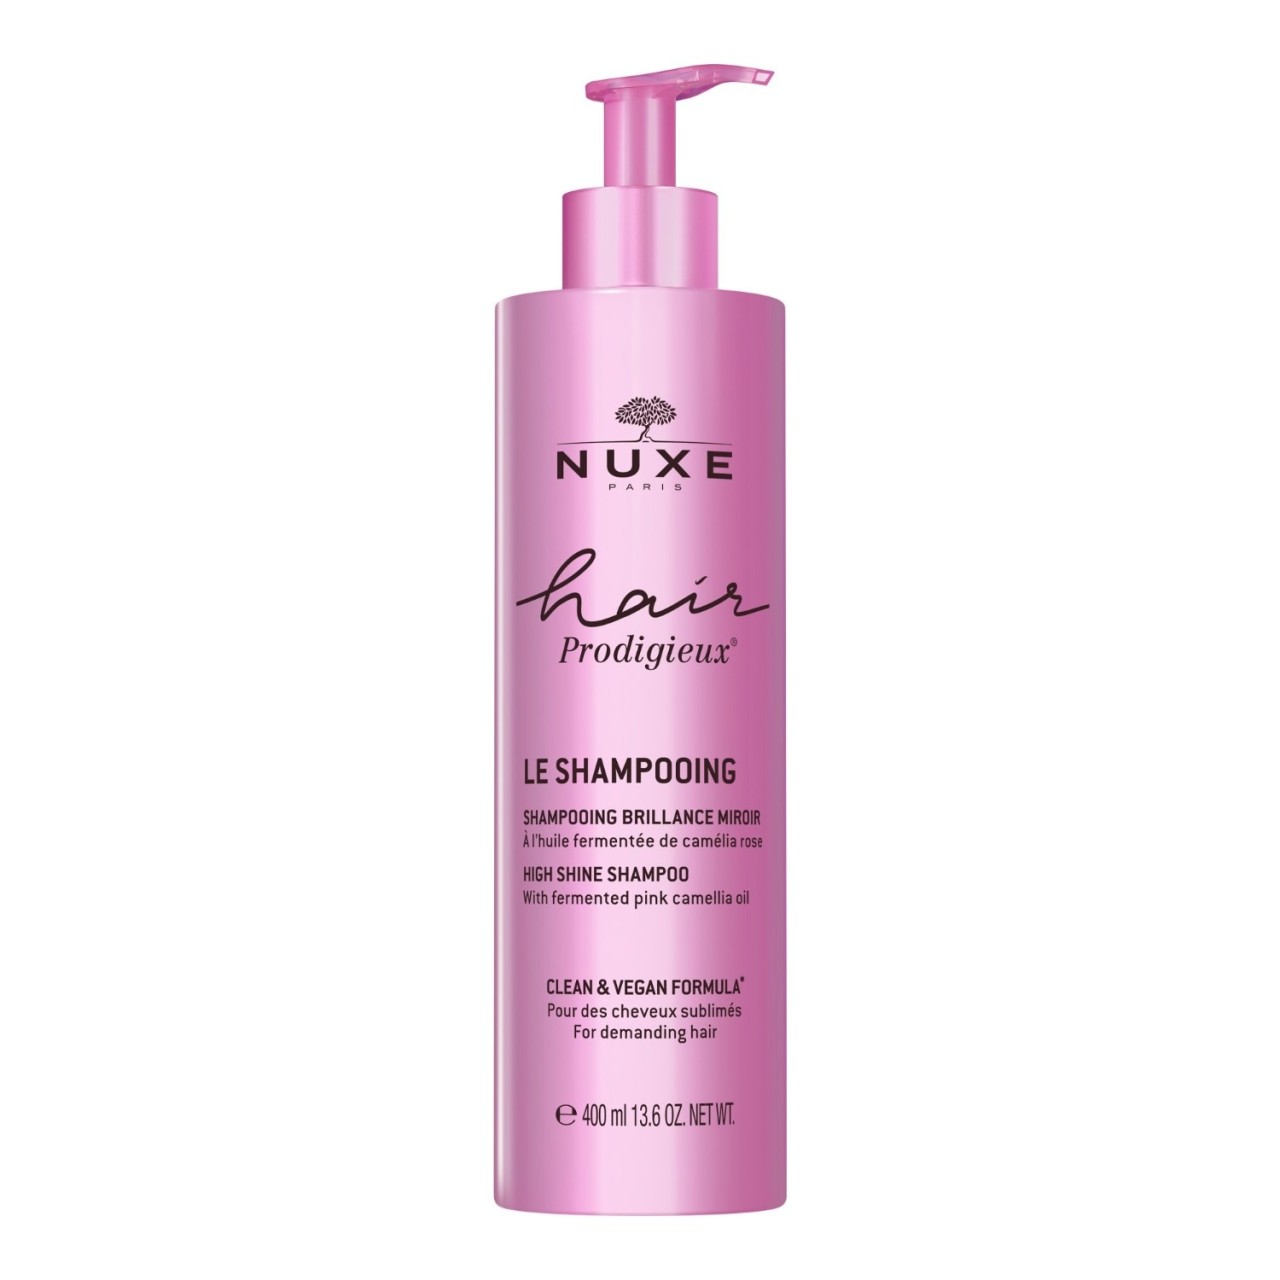 NUXE - High Shine Shampoo -  50 ml